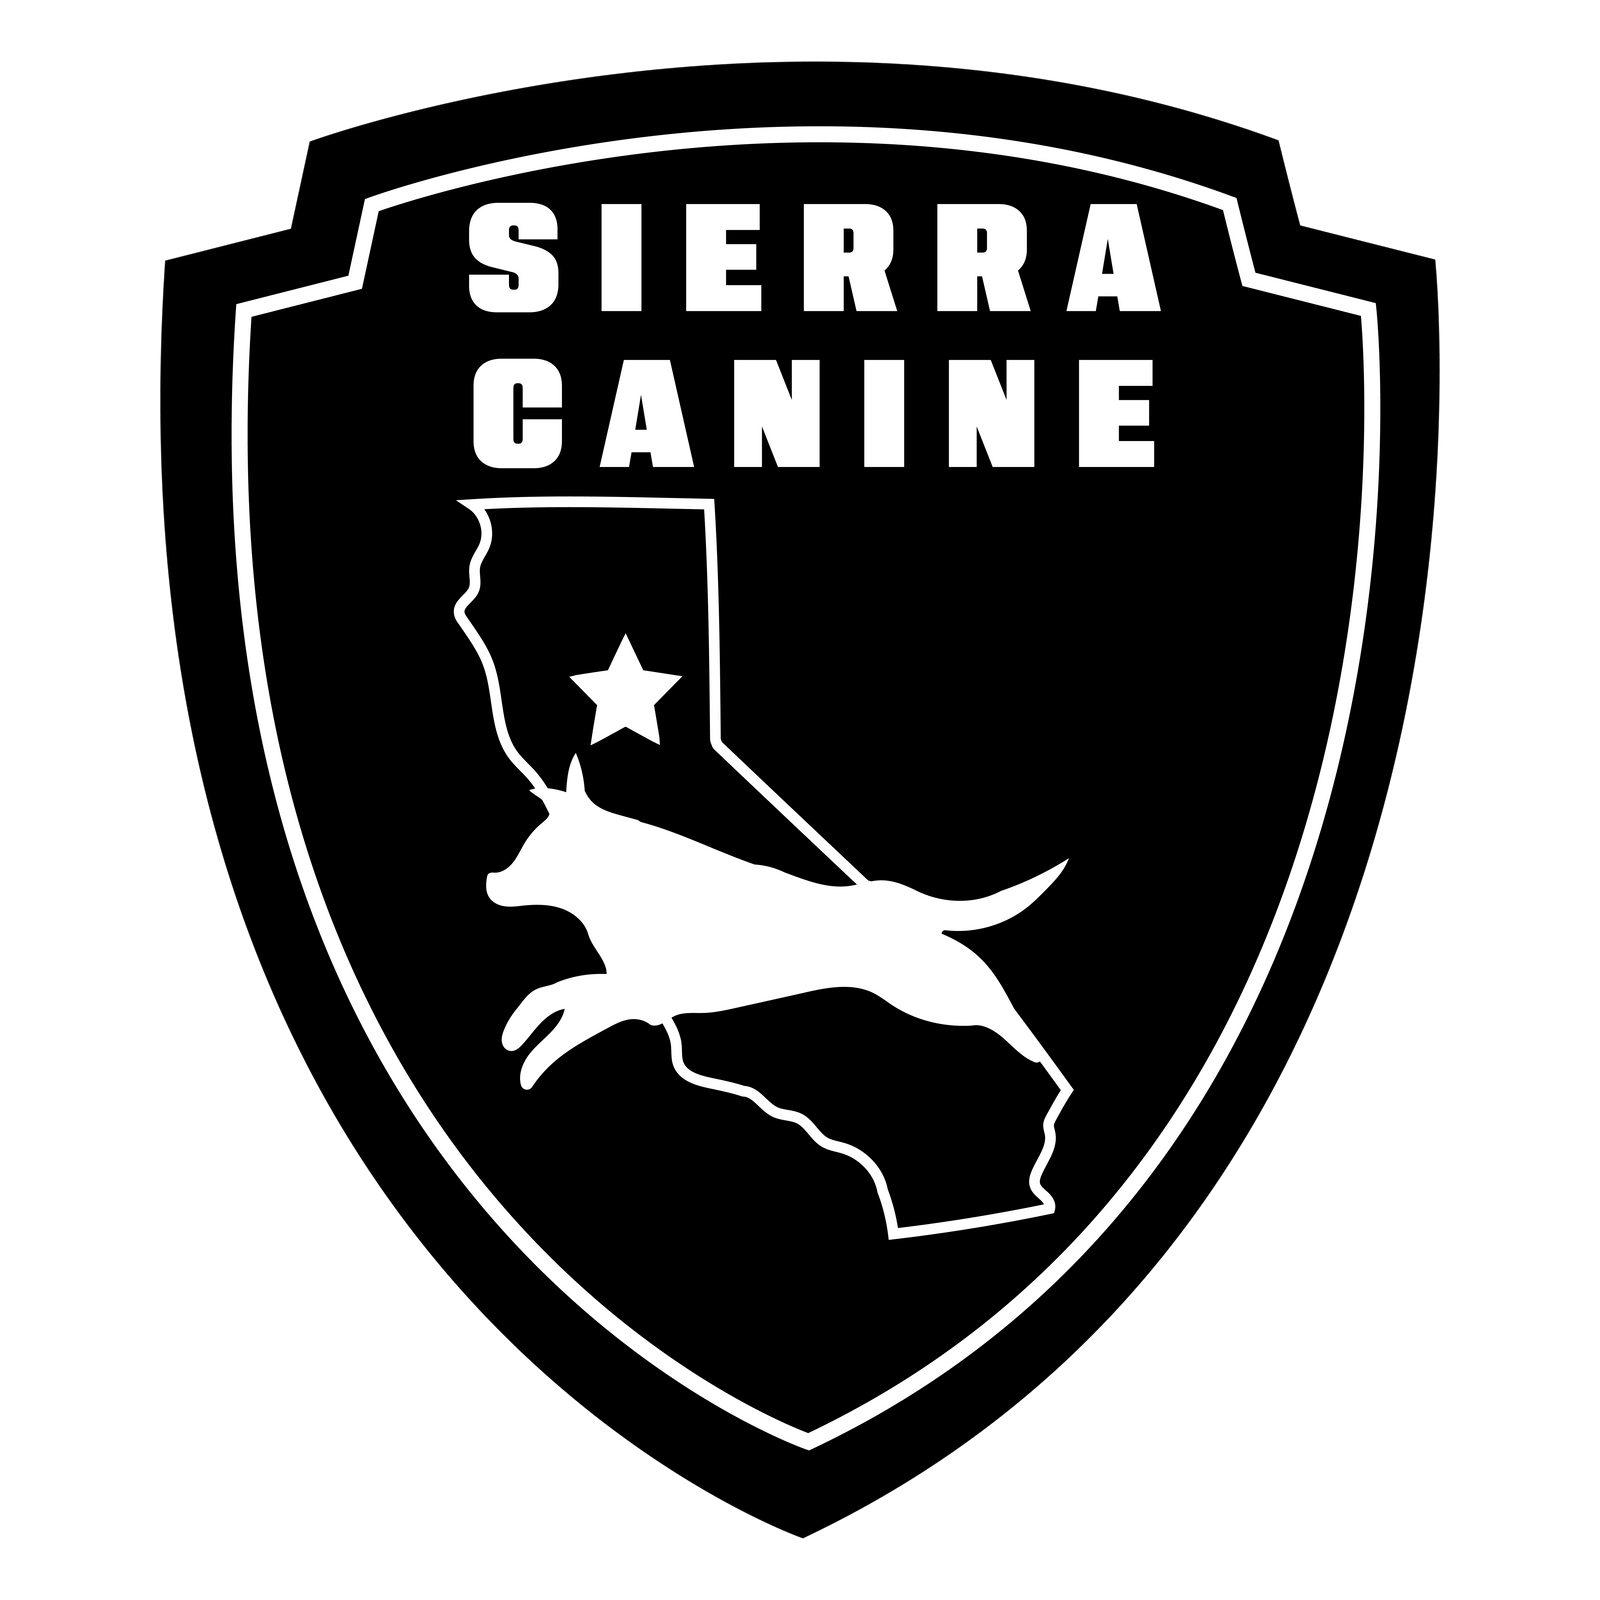 Sierra Canine New logo